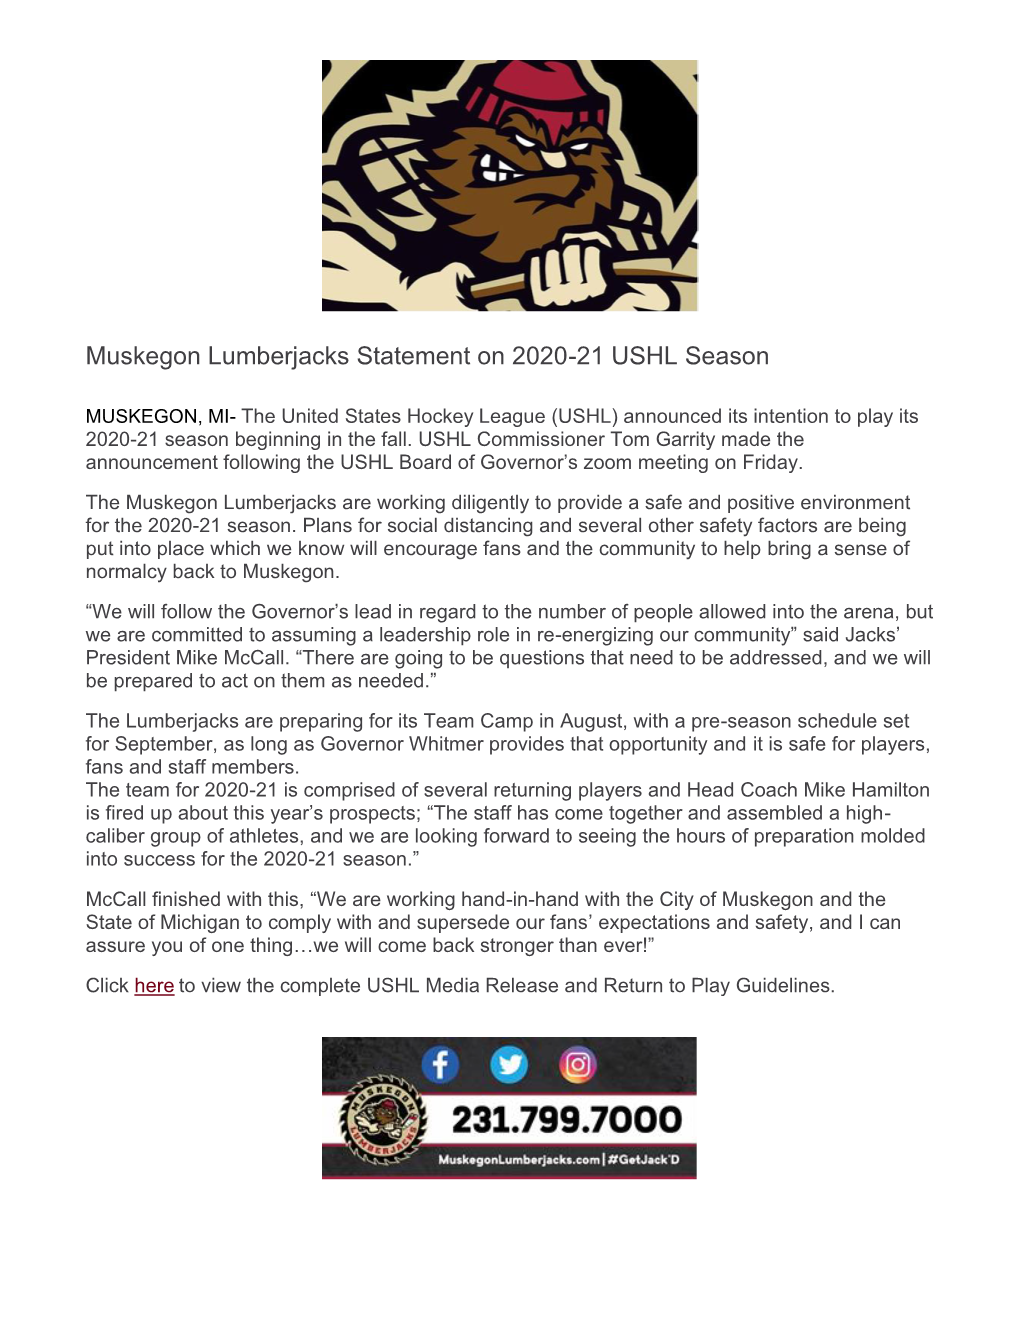 Muskegon Lumberjacks Statement on 2020-21 USHL Season